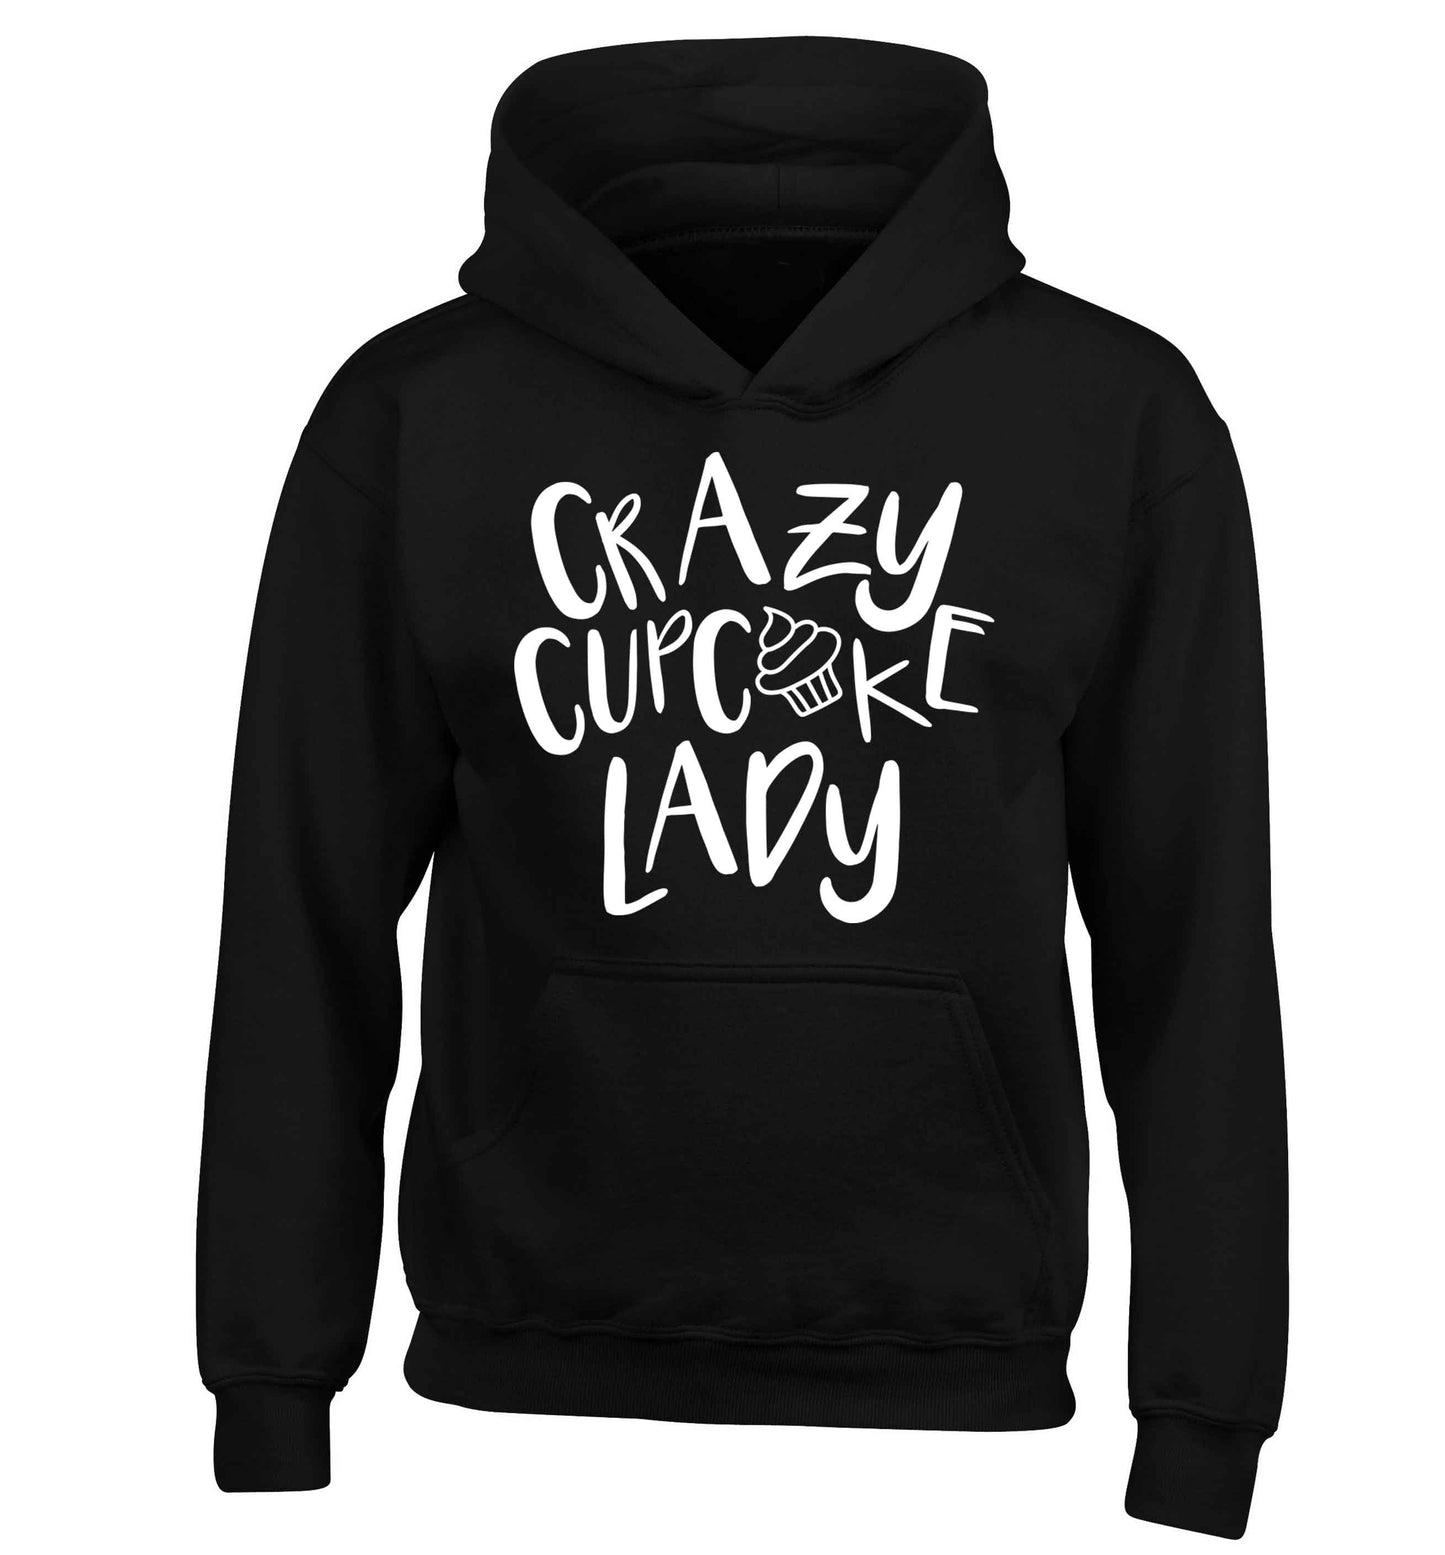 Crazy cupcake lady children's black hoodie 12-13 Years